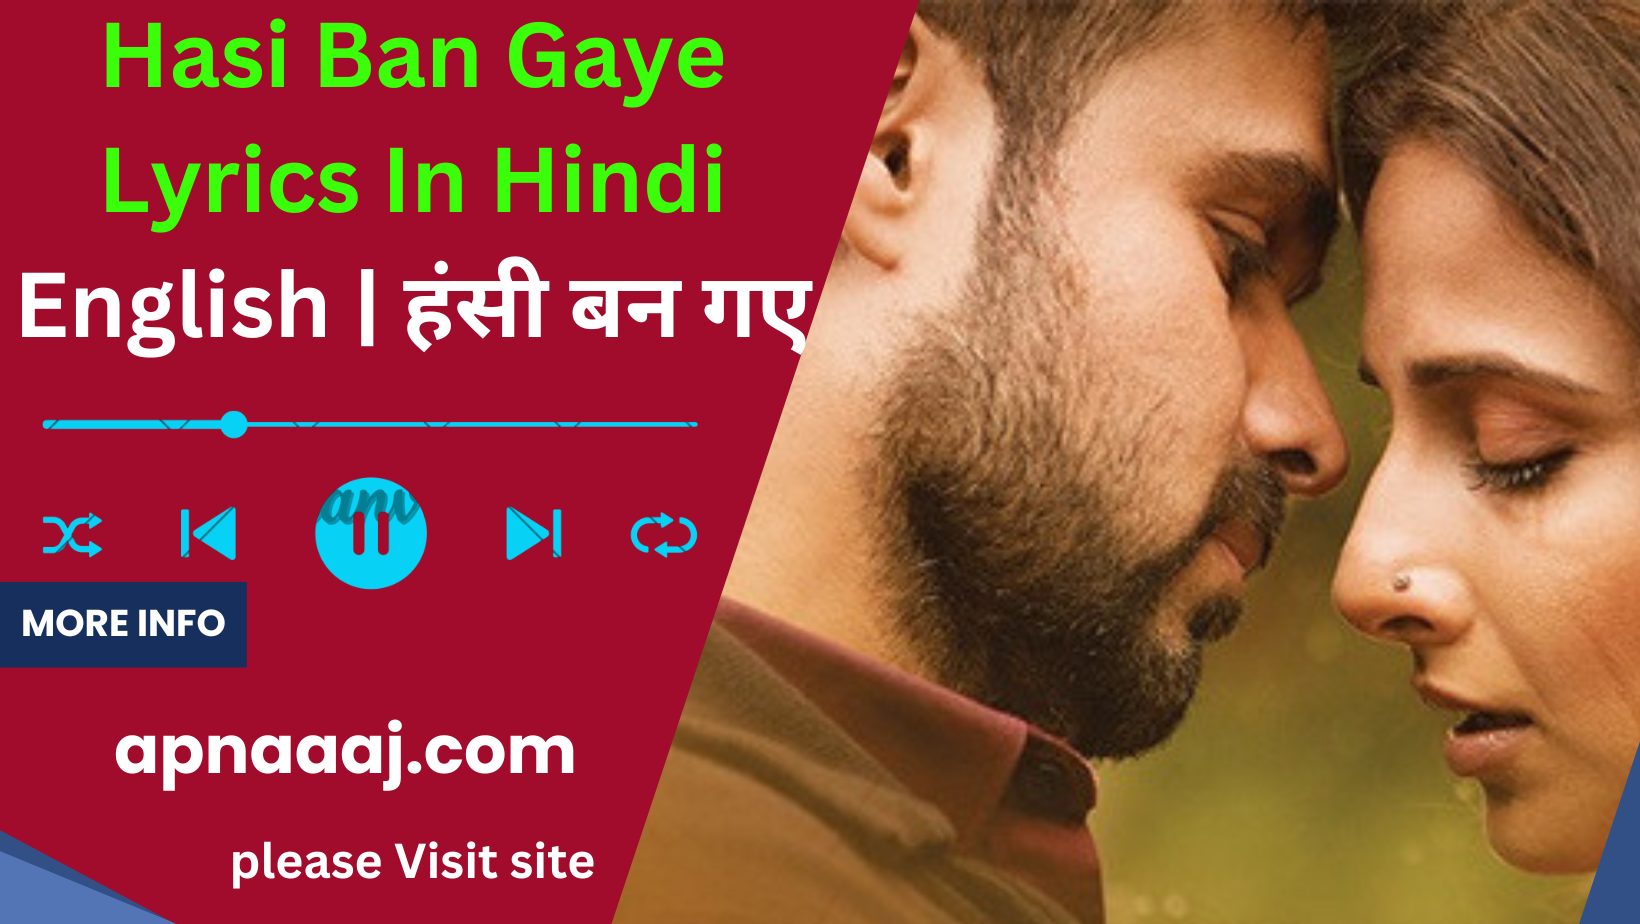 Hasi Ban Gaye Lyrics In Hindi English